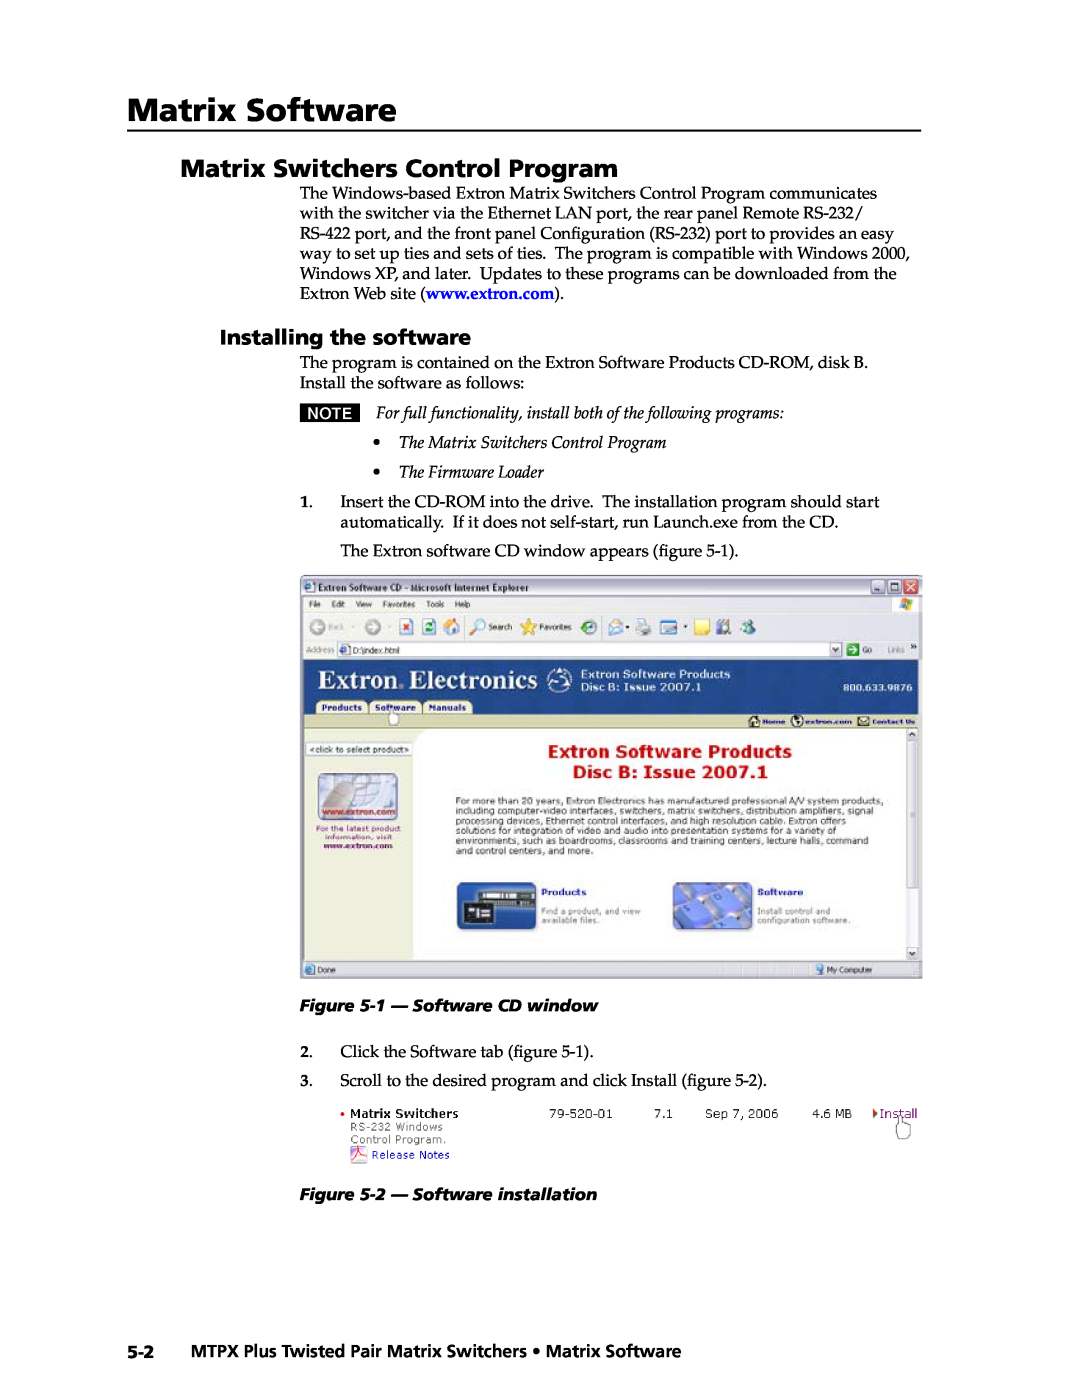 Extron electronic MTPX Plus Series manual Matrix Software, Matrix Switchers Control Program, Installing the software 